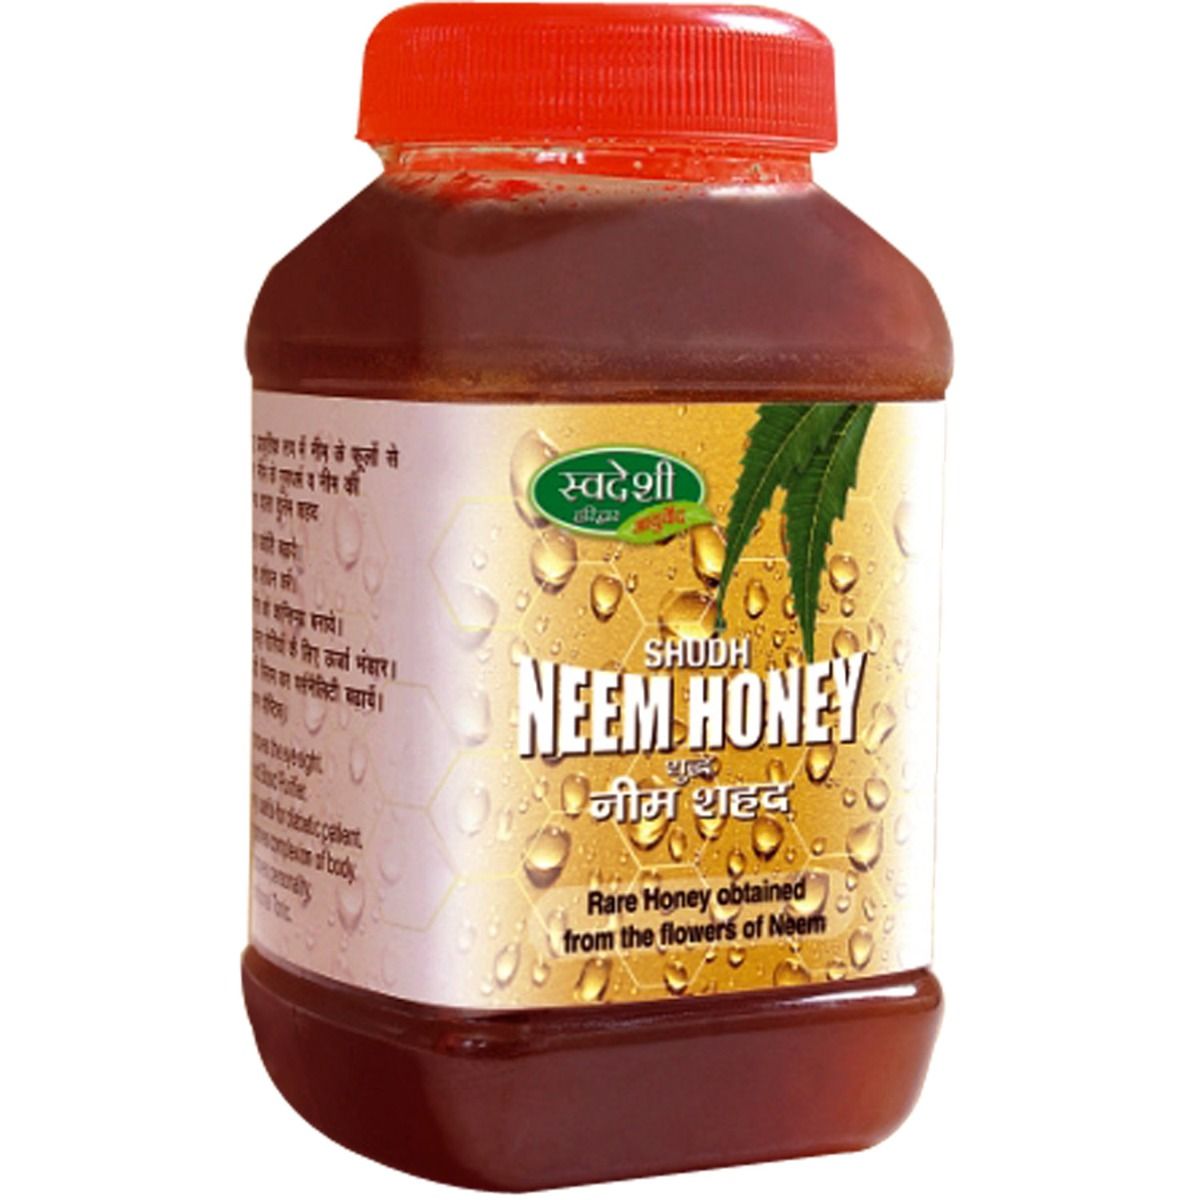 Swadeshi Shudh Neem Honey, 250 gm, Pack of 1 